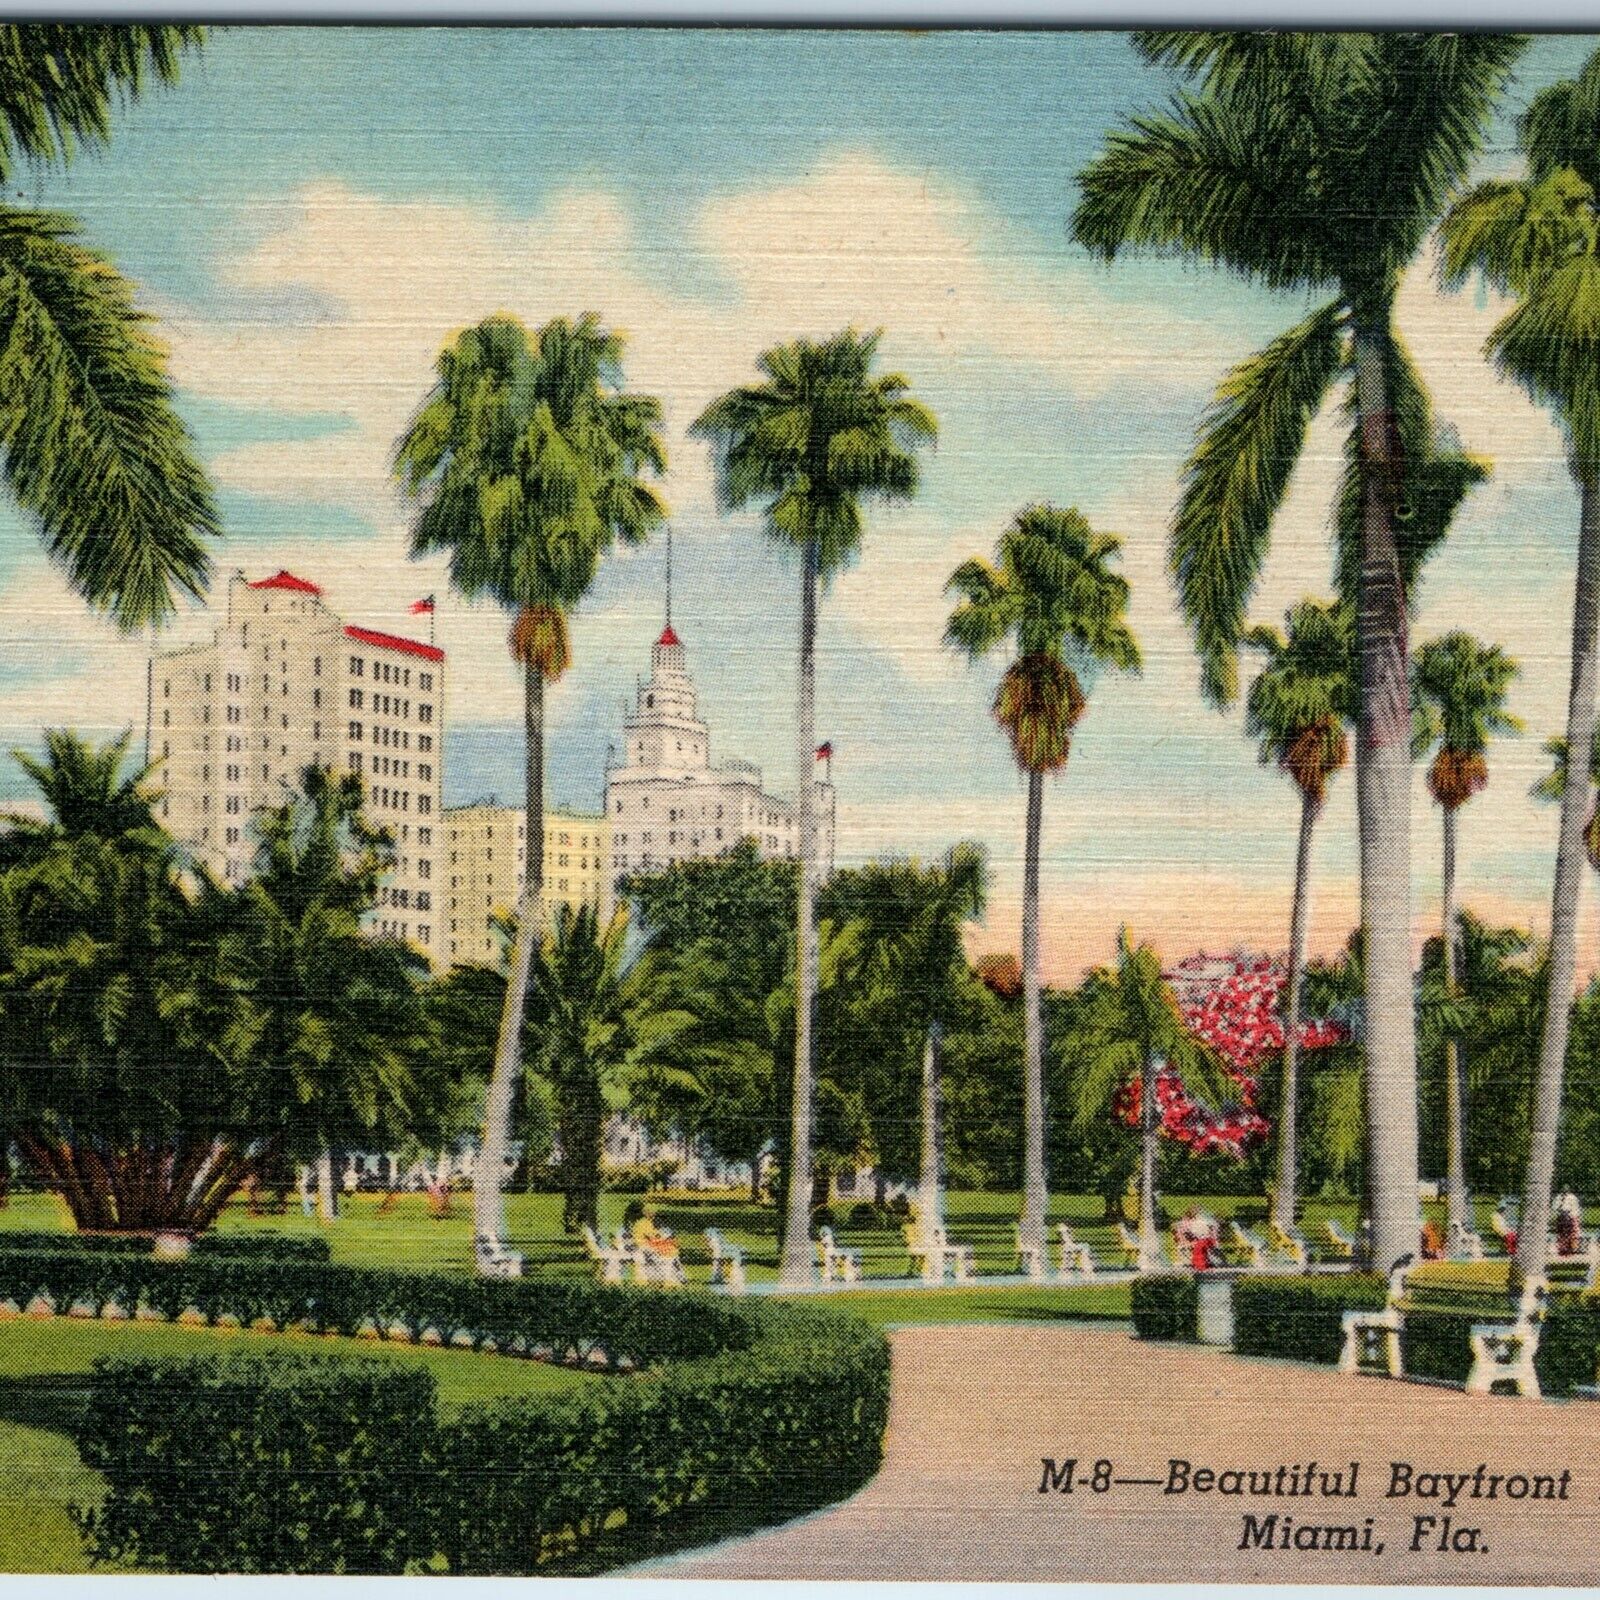 1951 Miami, FL Lovely Bayfront Park Palm Tree Landscaping Teich Gulf Stream A210